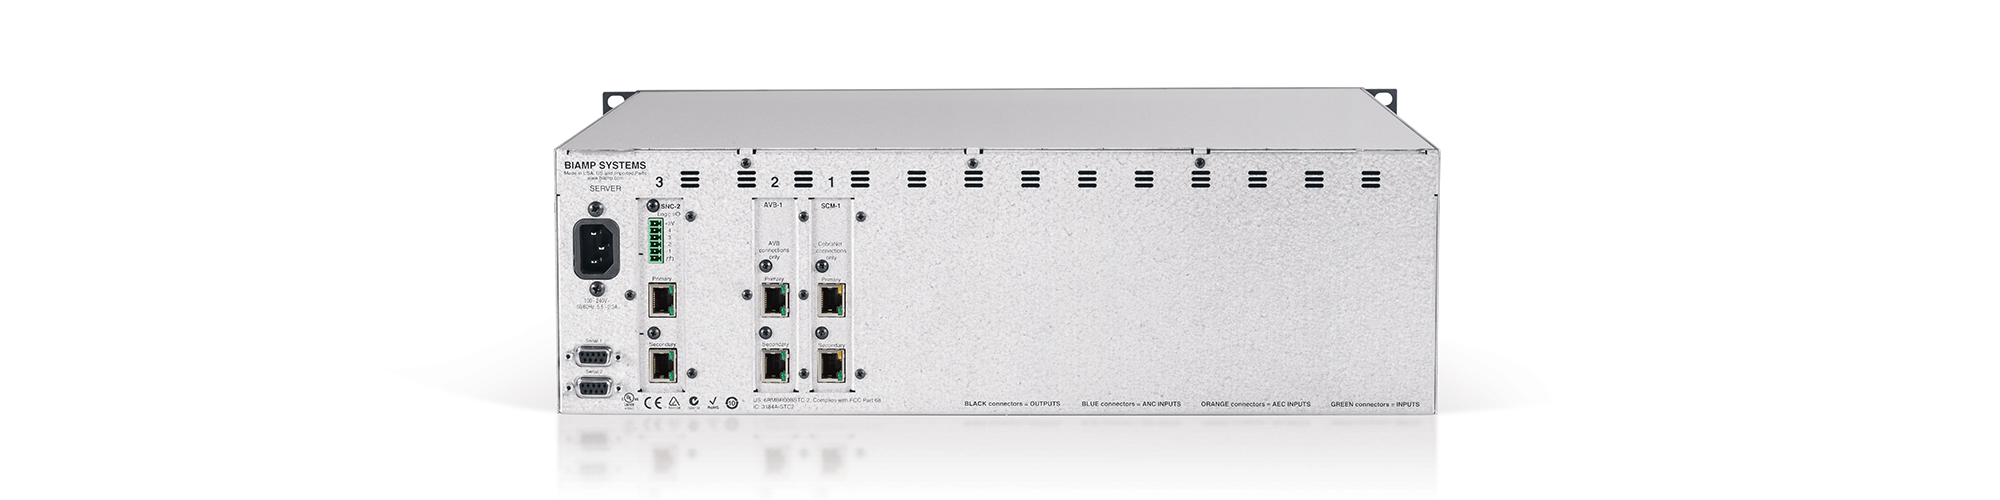 Servidor de red digital, hasta 8 Tarjetas DSP-2, 420 x 420 canales de entrada/salida por tarjeta AVB-1